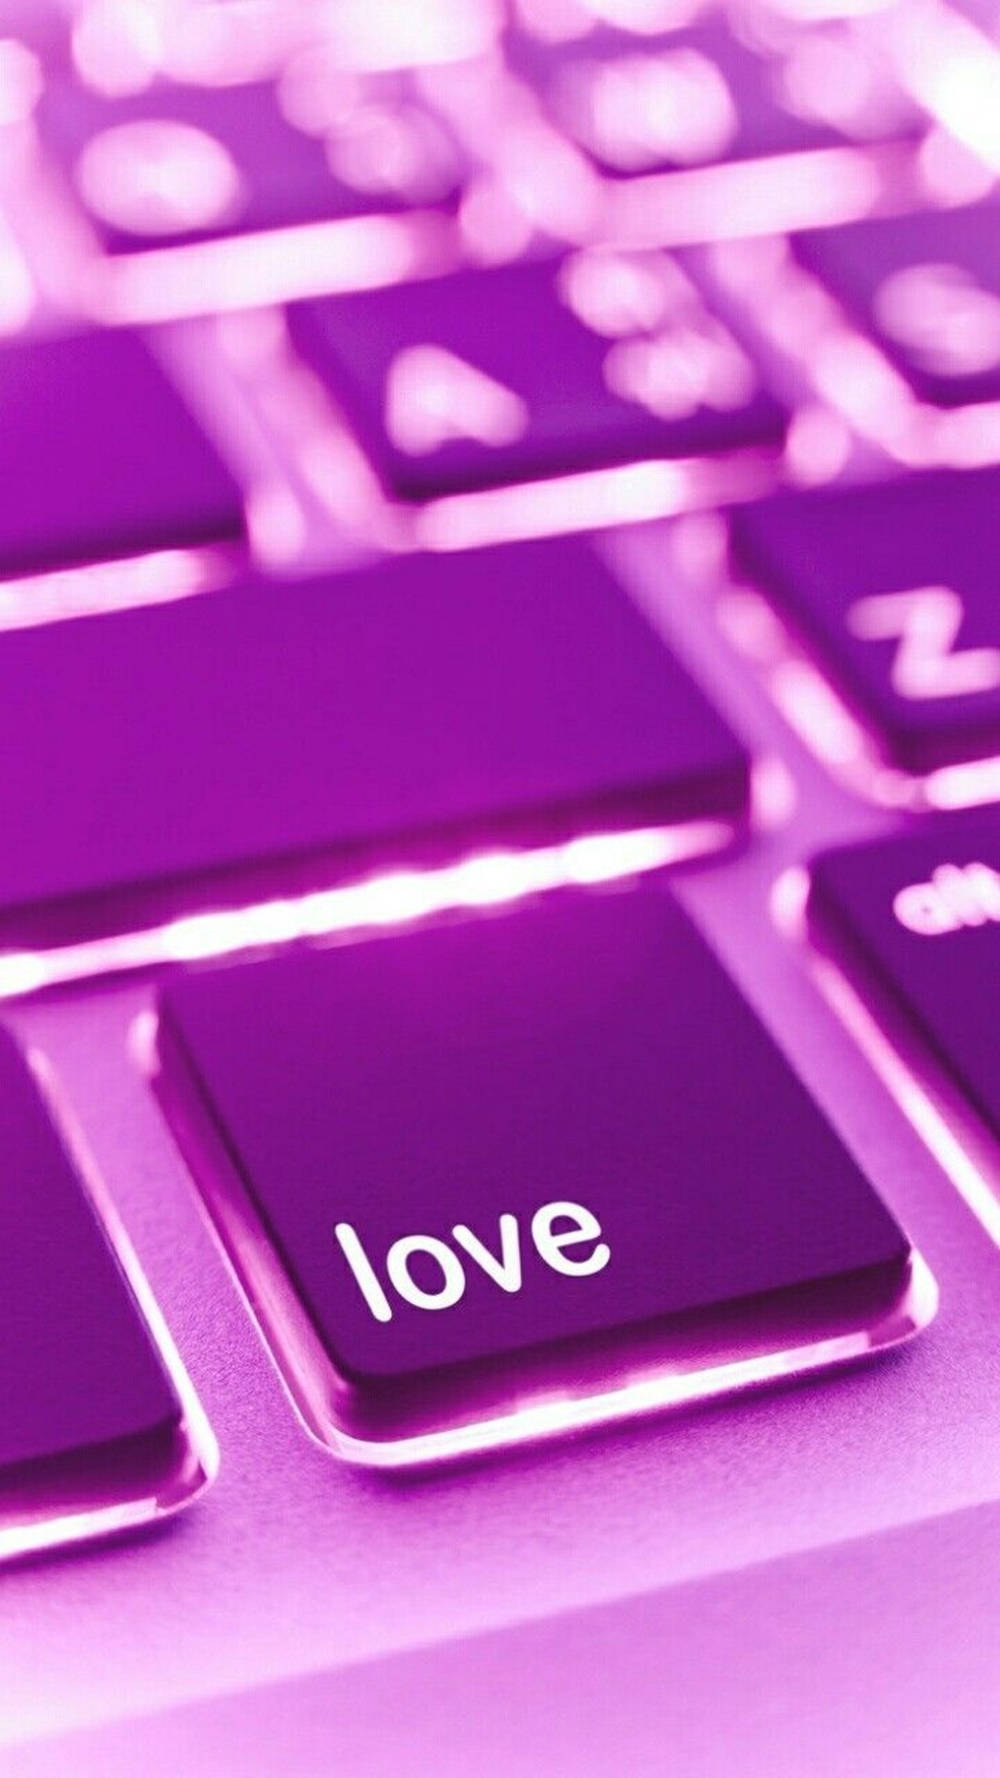 MacBook Love Keyboard Aesthetic Wallpaper